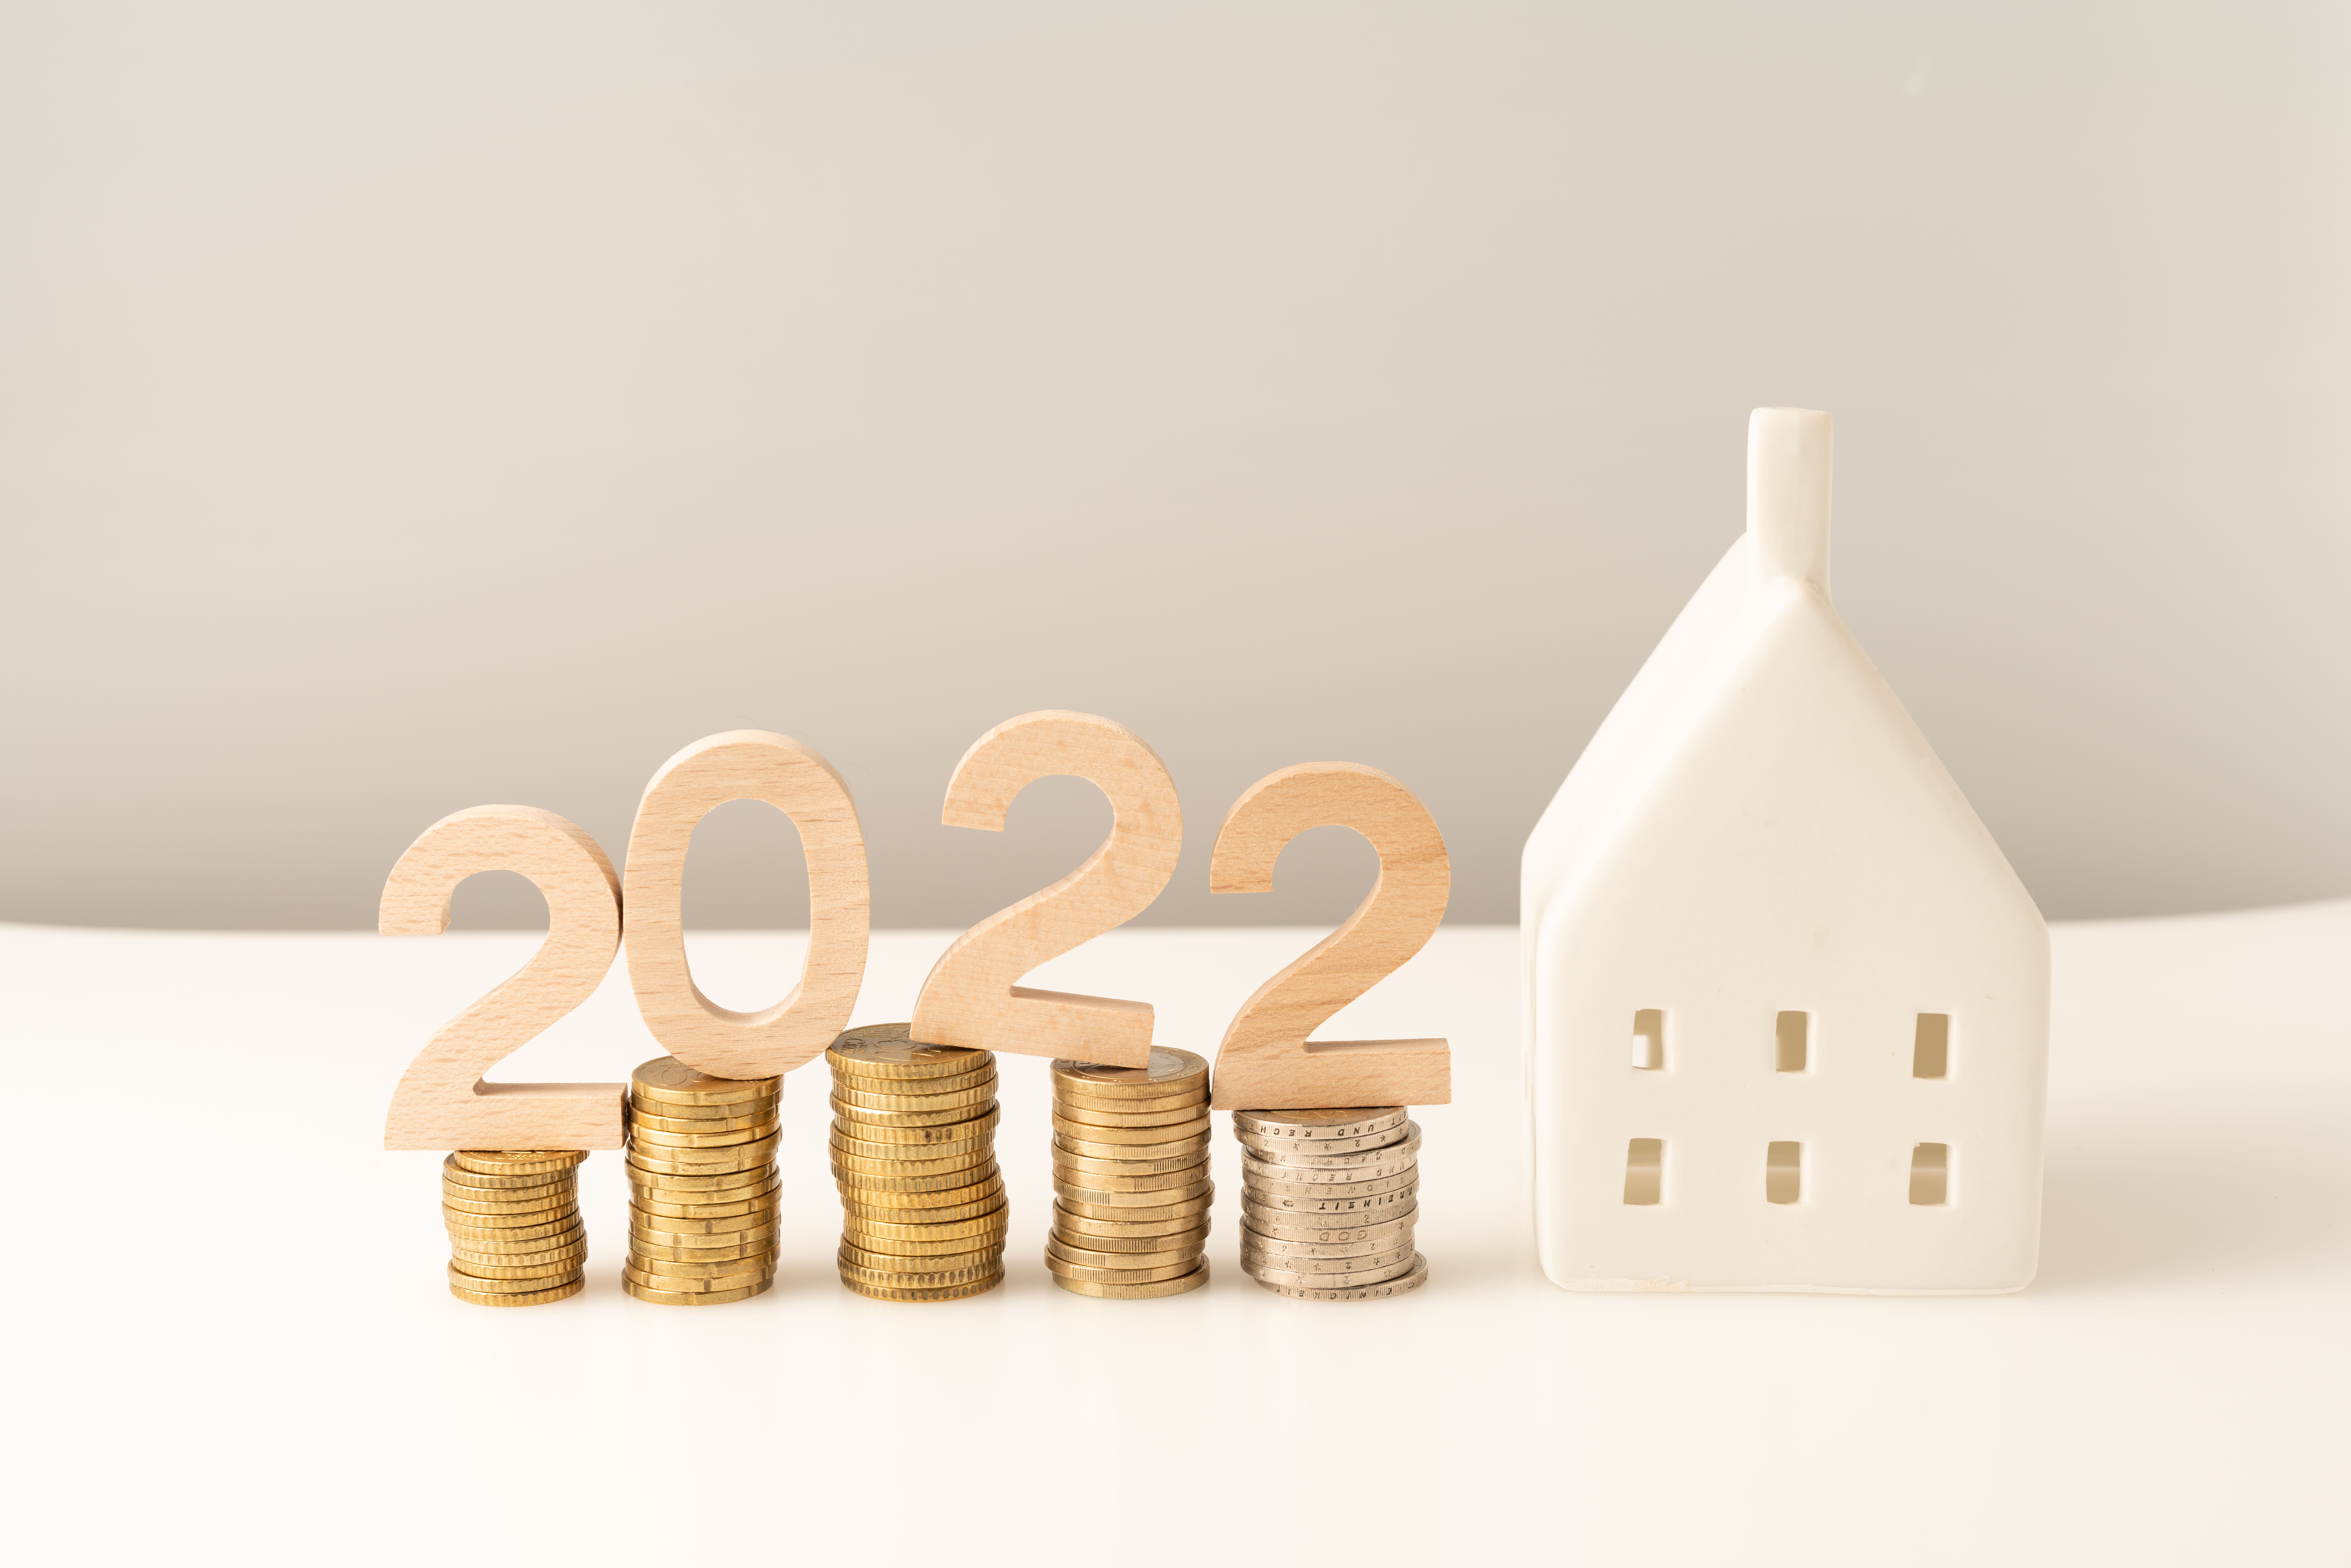 vender casa en 2022